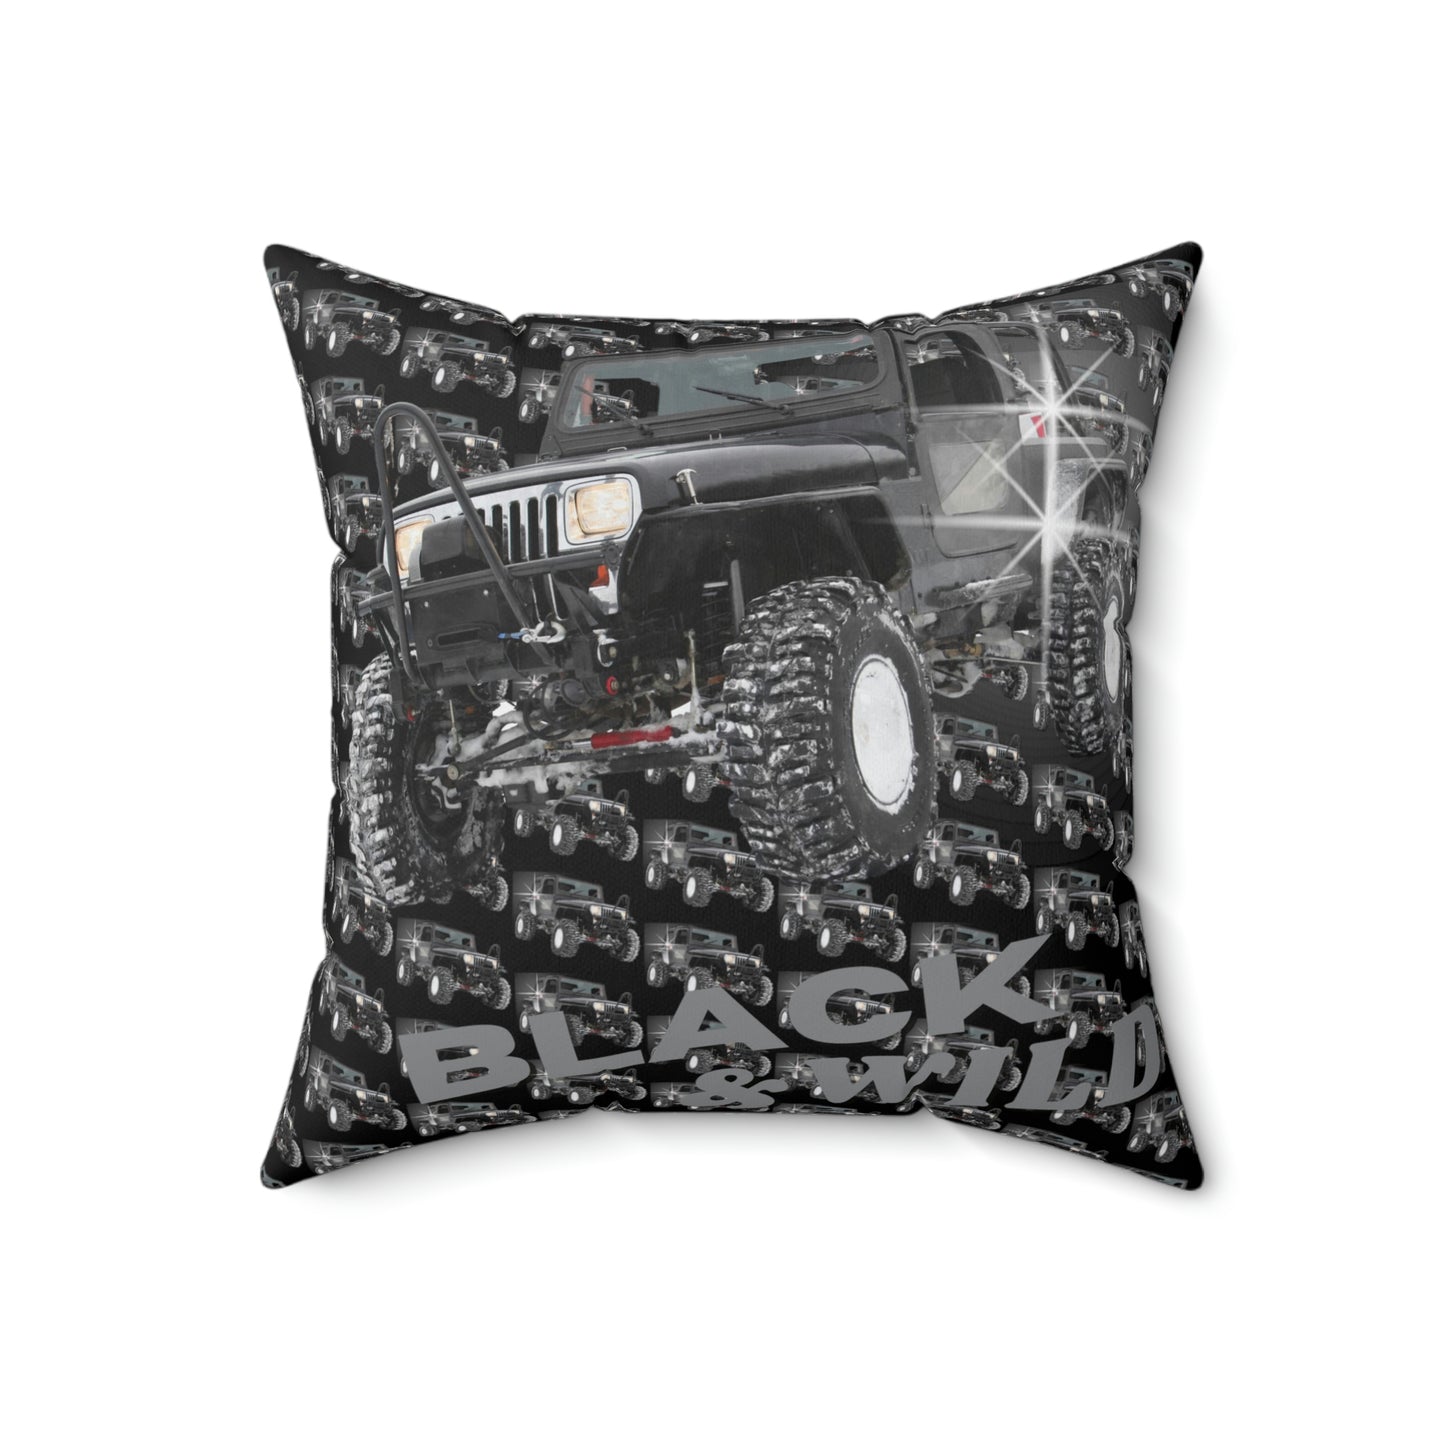 Black & Wild Spun Polyester Square Pillow